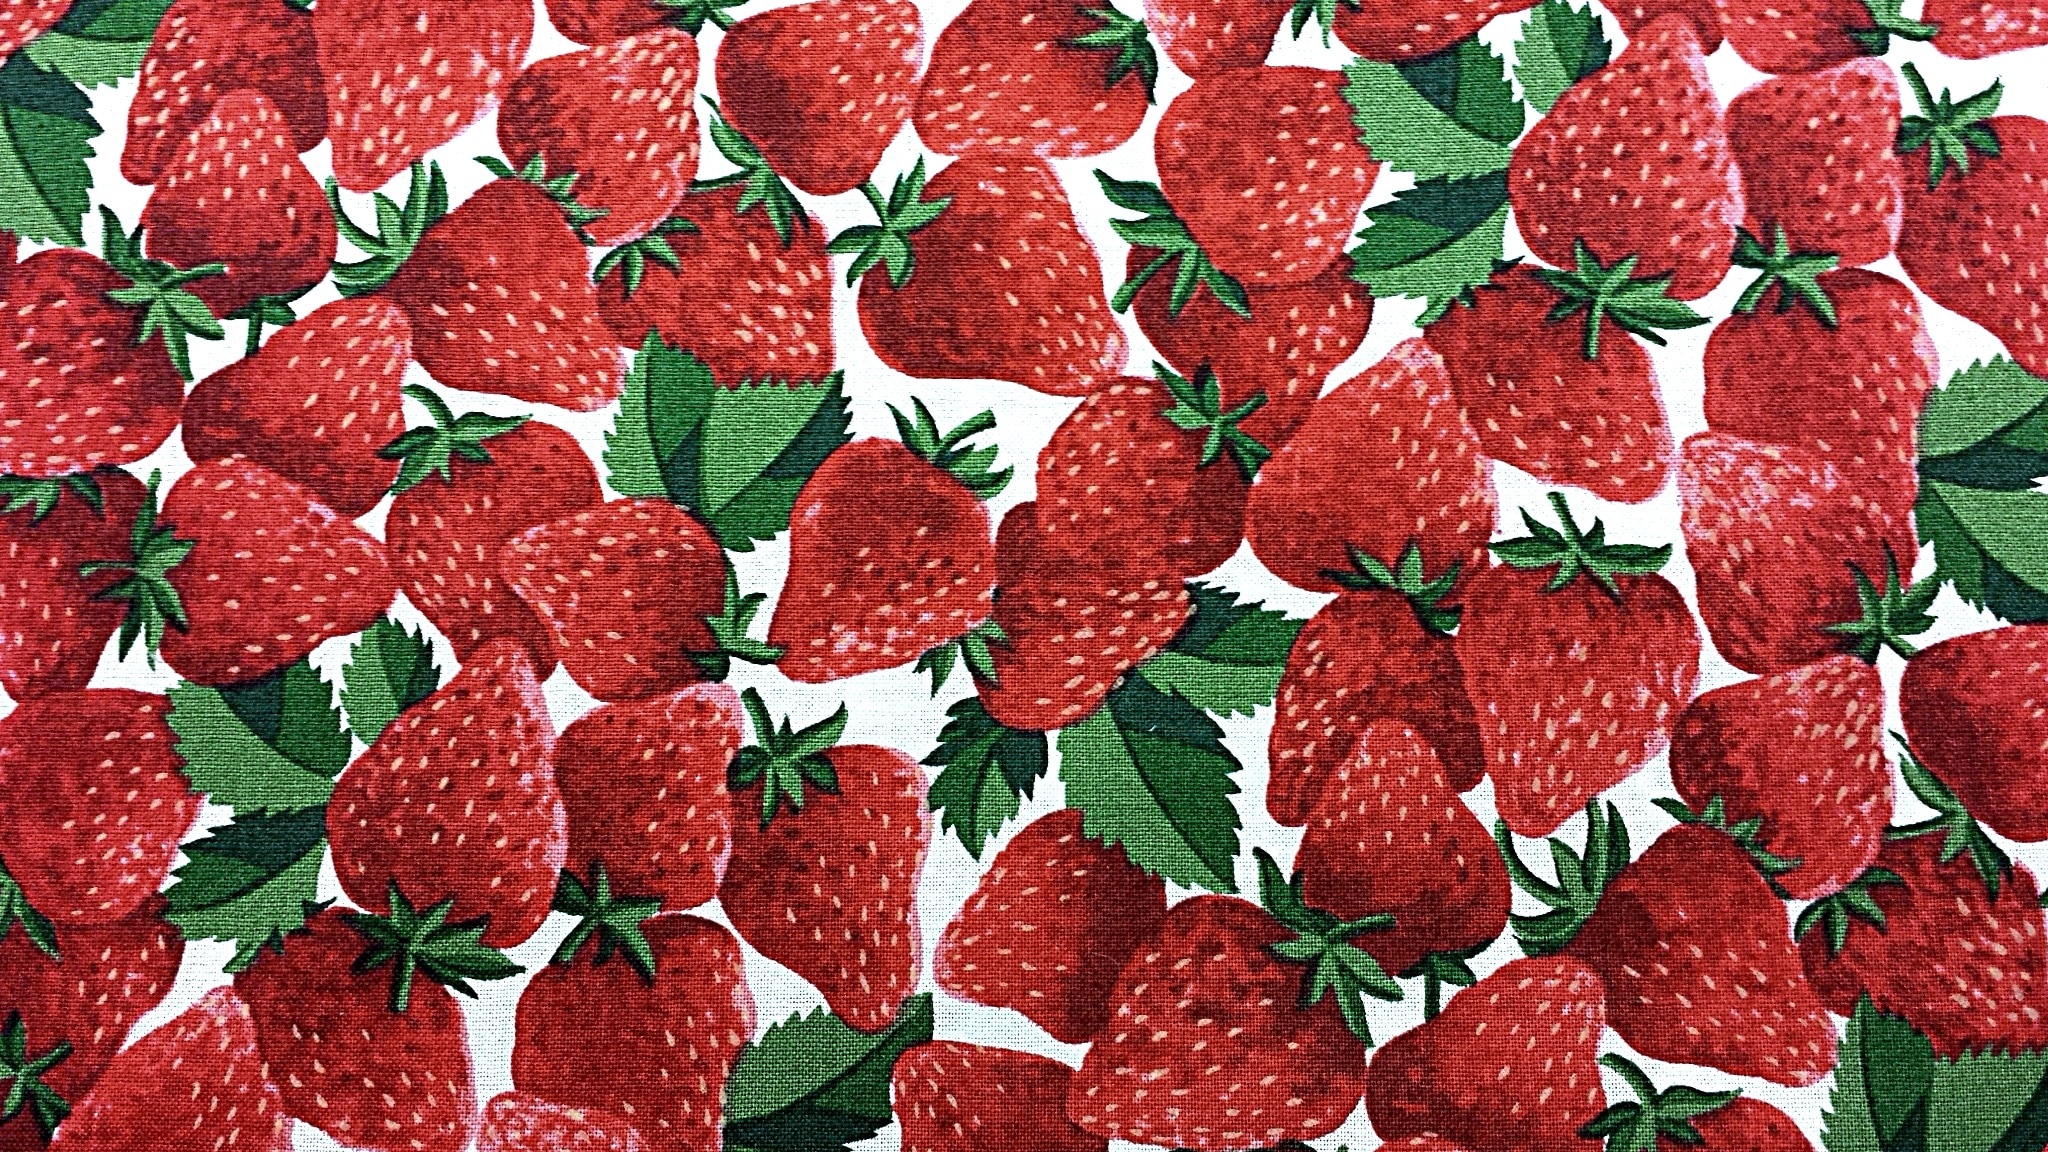 strawberry fruit lot